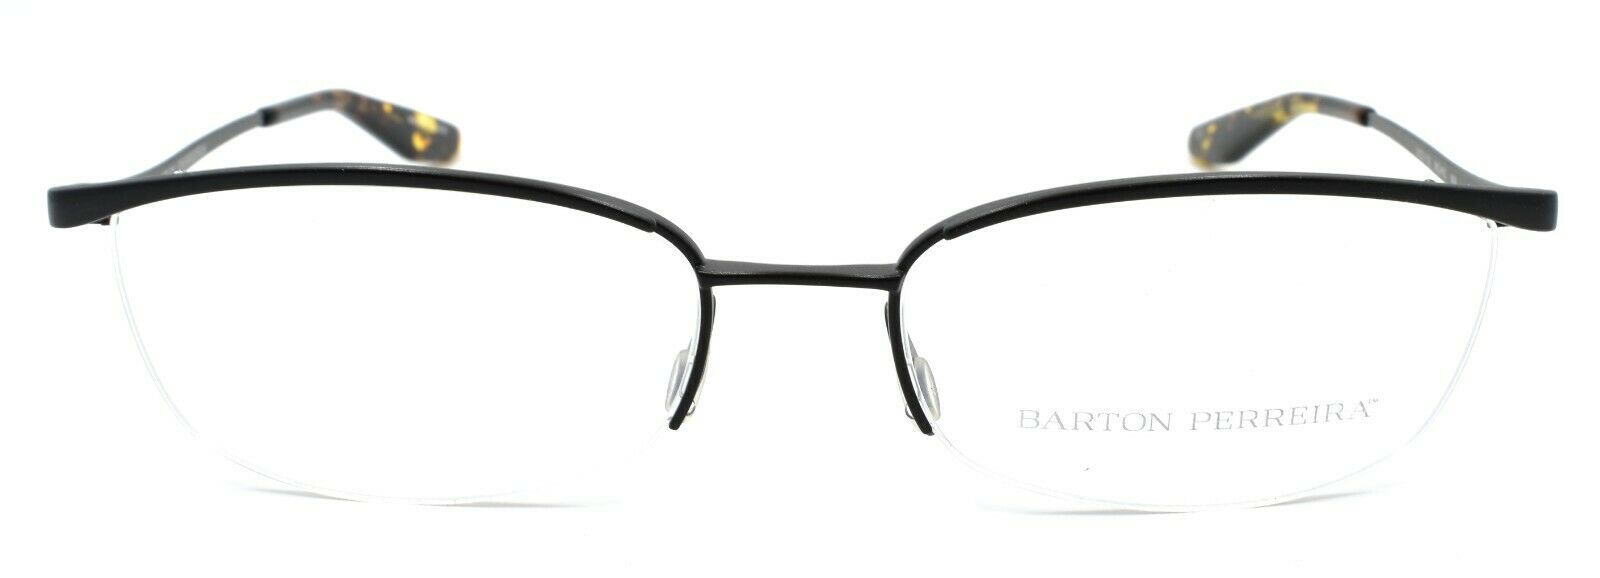 2-Barton Perreira Mia Women's Eyeglasses 53-17-135 Black Satin / Heroine Chic-672263038849-IKSpecs